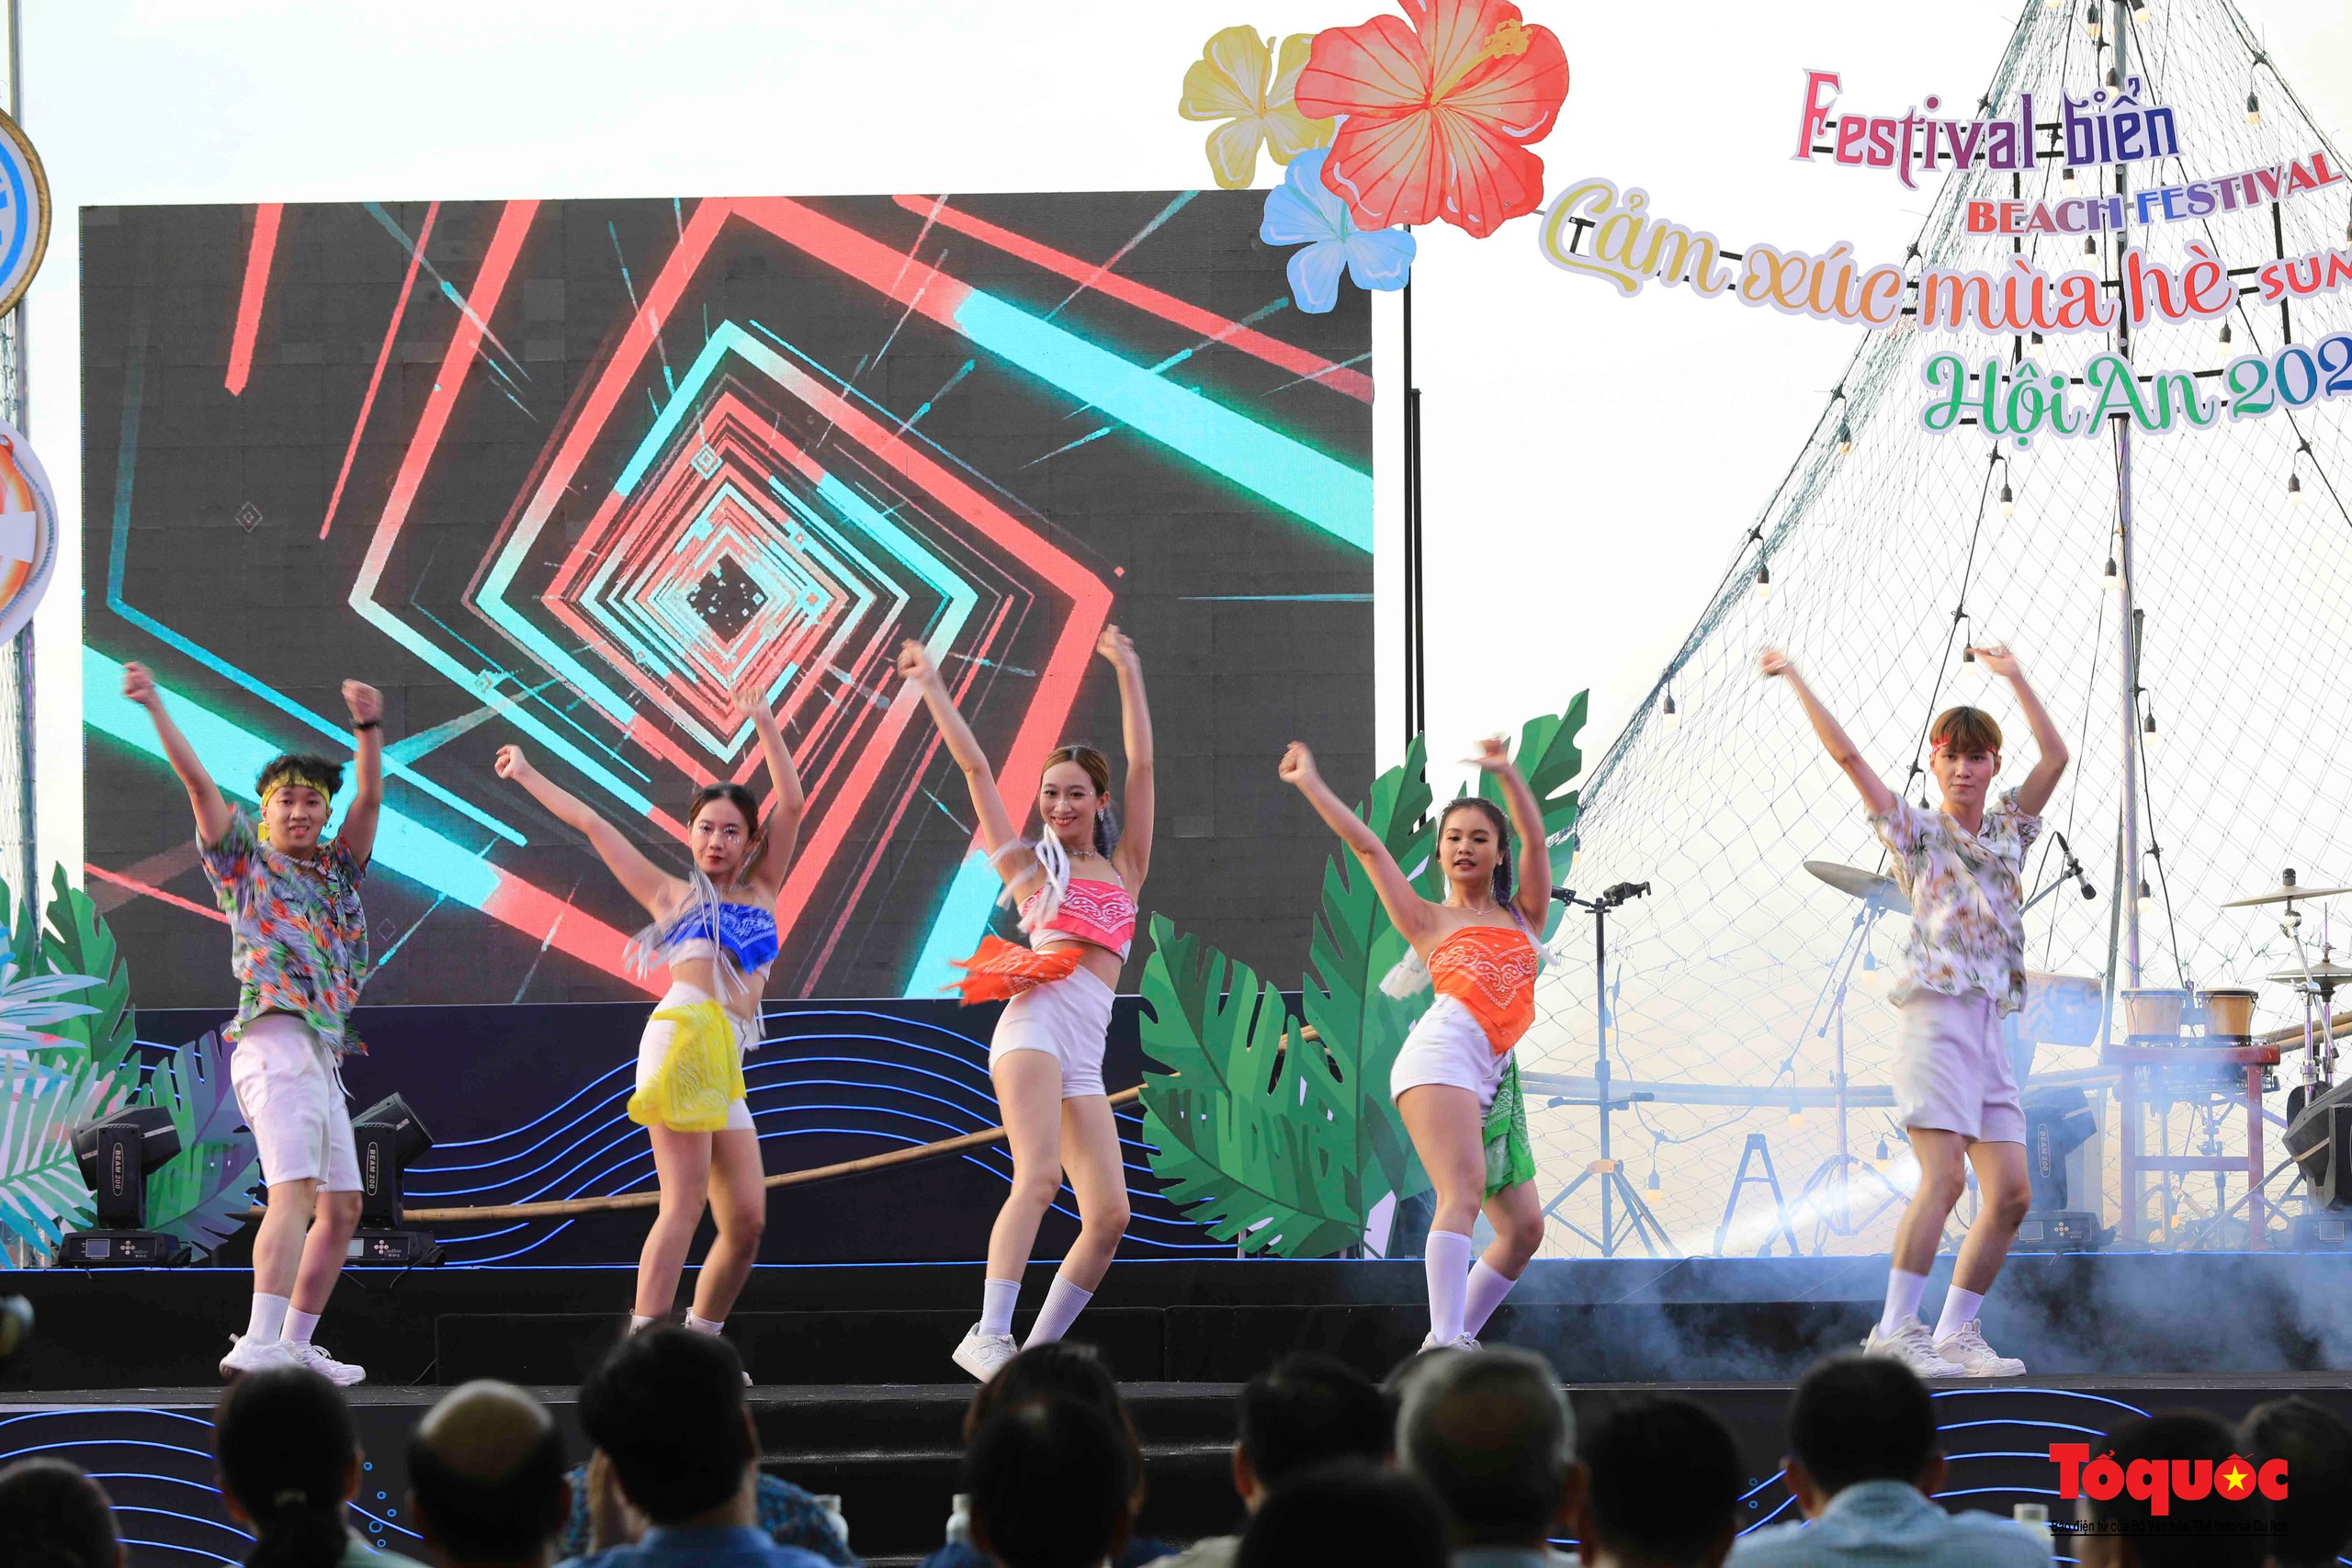 Khai mạc Festival biển “Hội An - Cảm xúc mùa hè” - Ảnh 8.